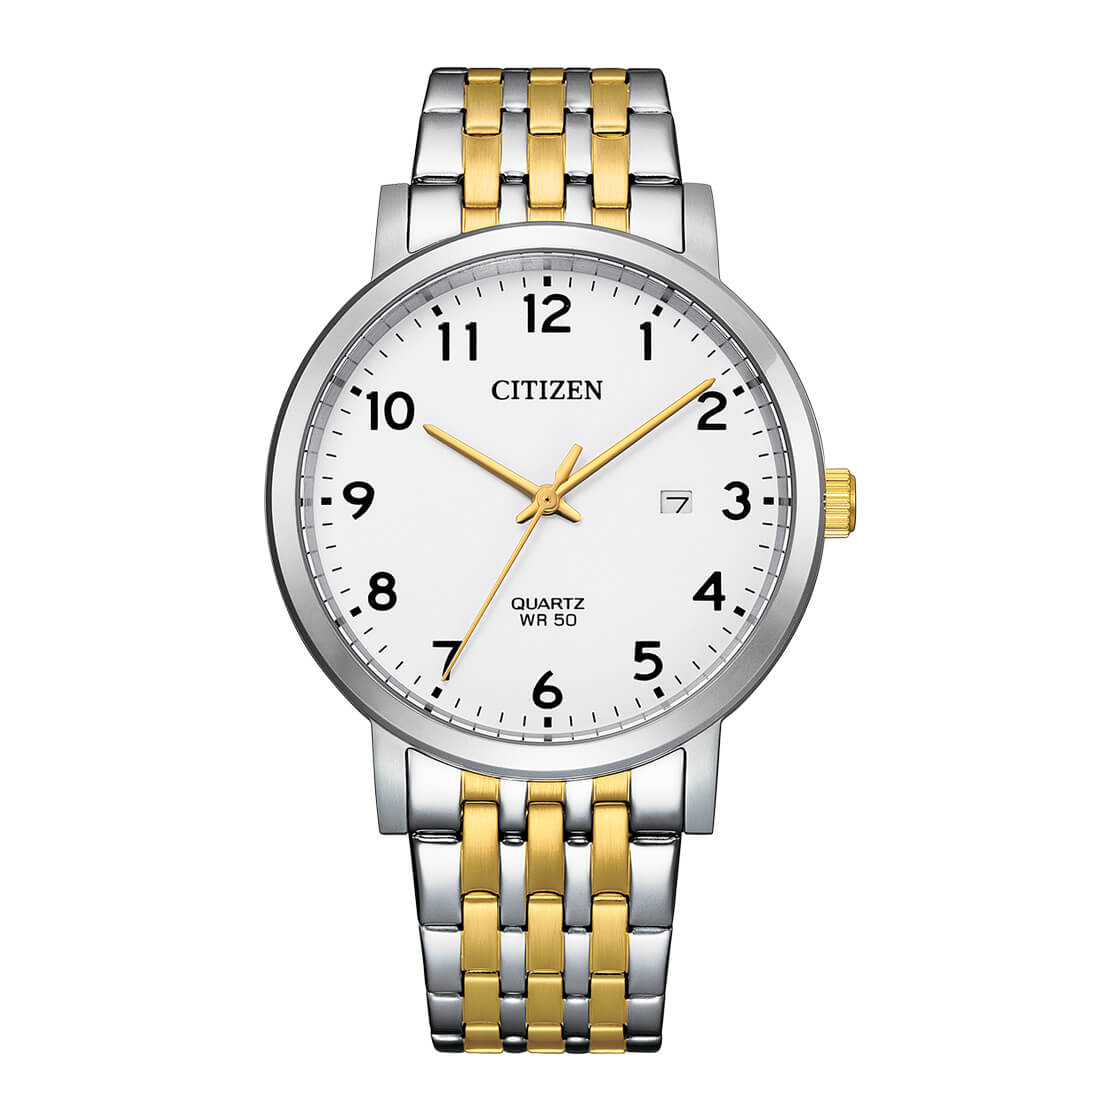 Citizen Men's Quartz White Dial Watch - BI5076-51A